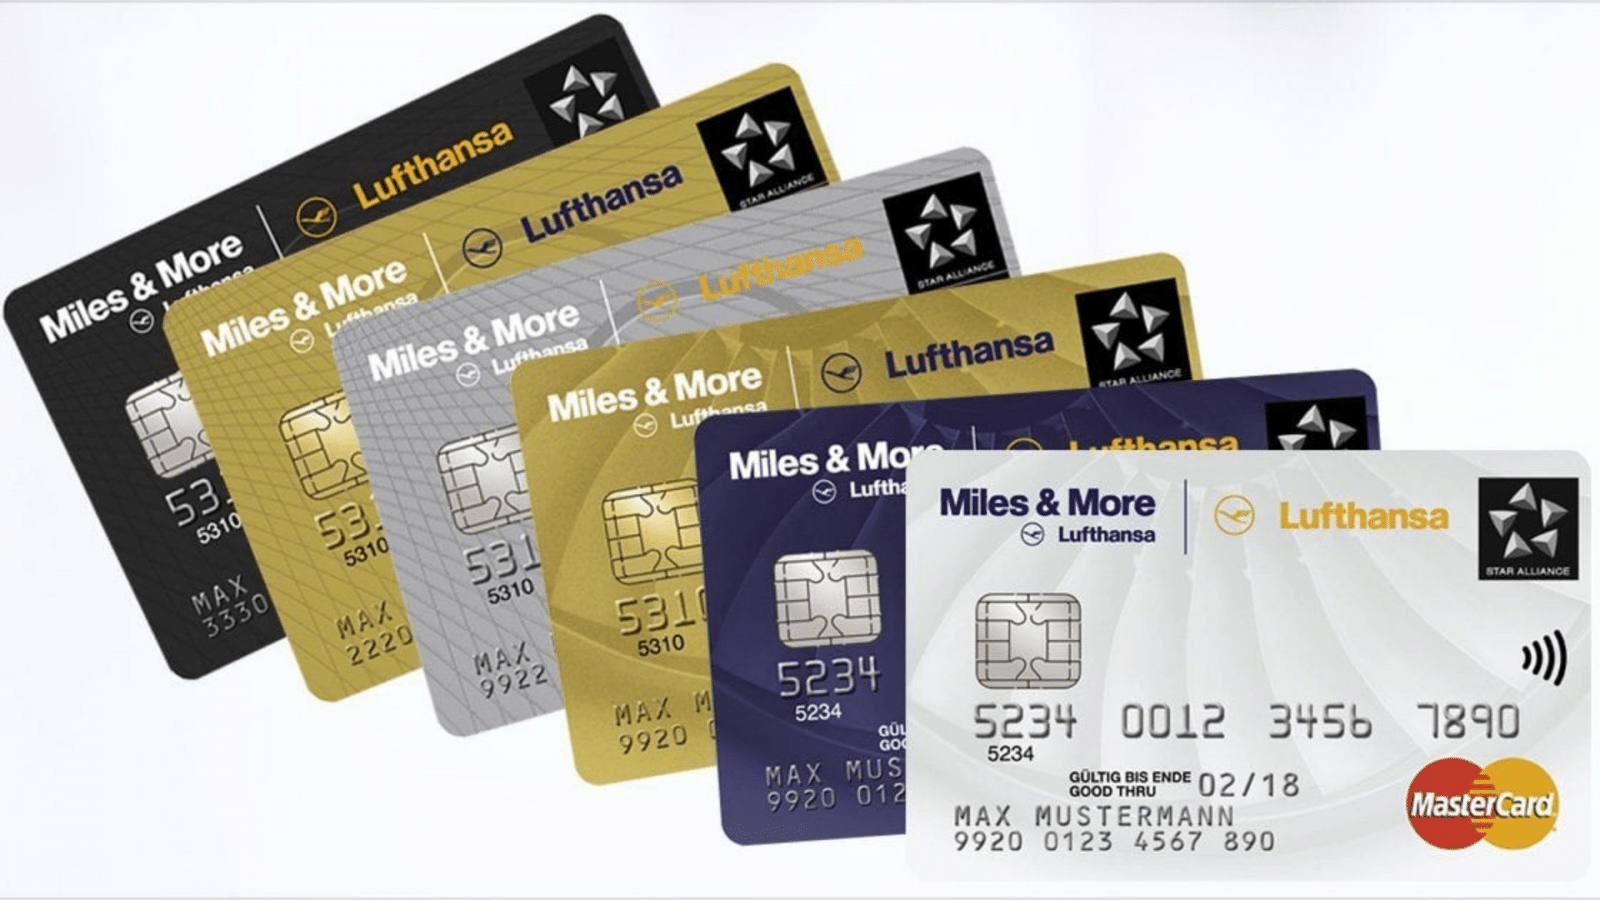 Телефон miles. Карта Miles and more. Мильная карта Lufthansa. Банковских картах пассажиров. Lufthansa Золотая карта лояльности.